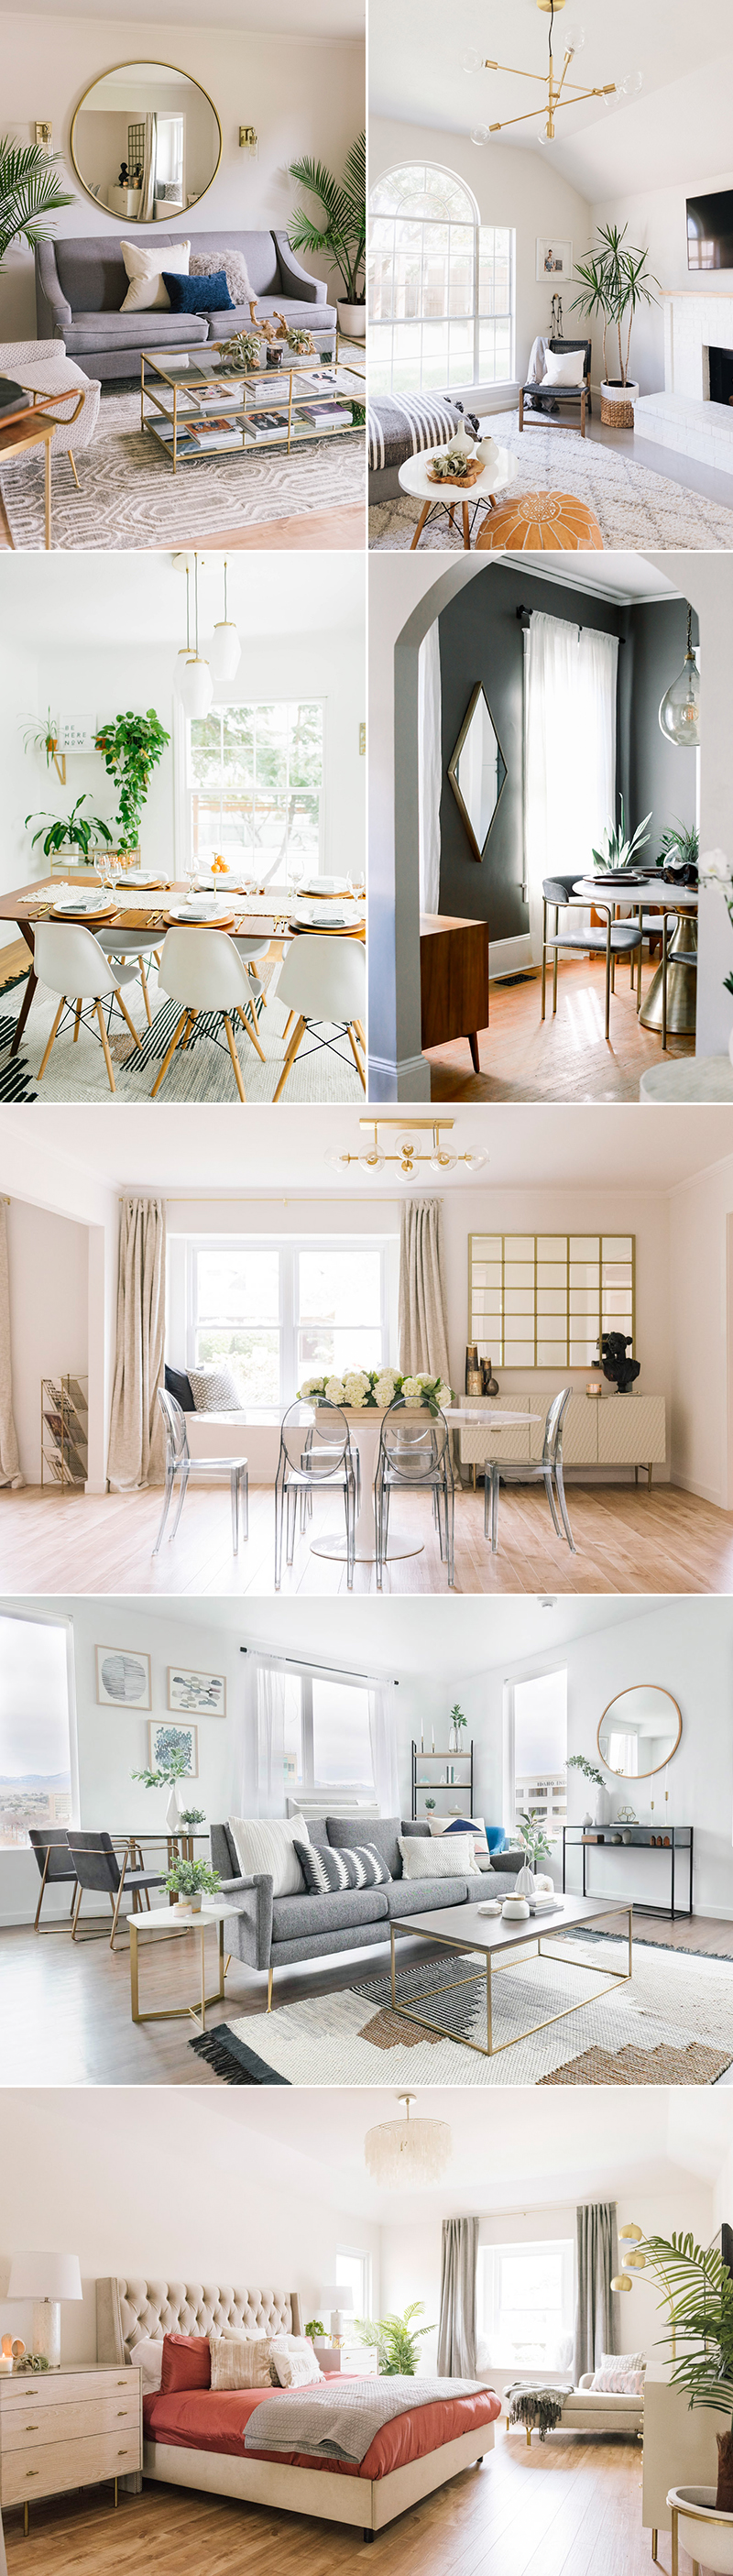 home decor interior design trends 2019 - classic glam